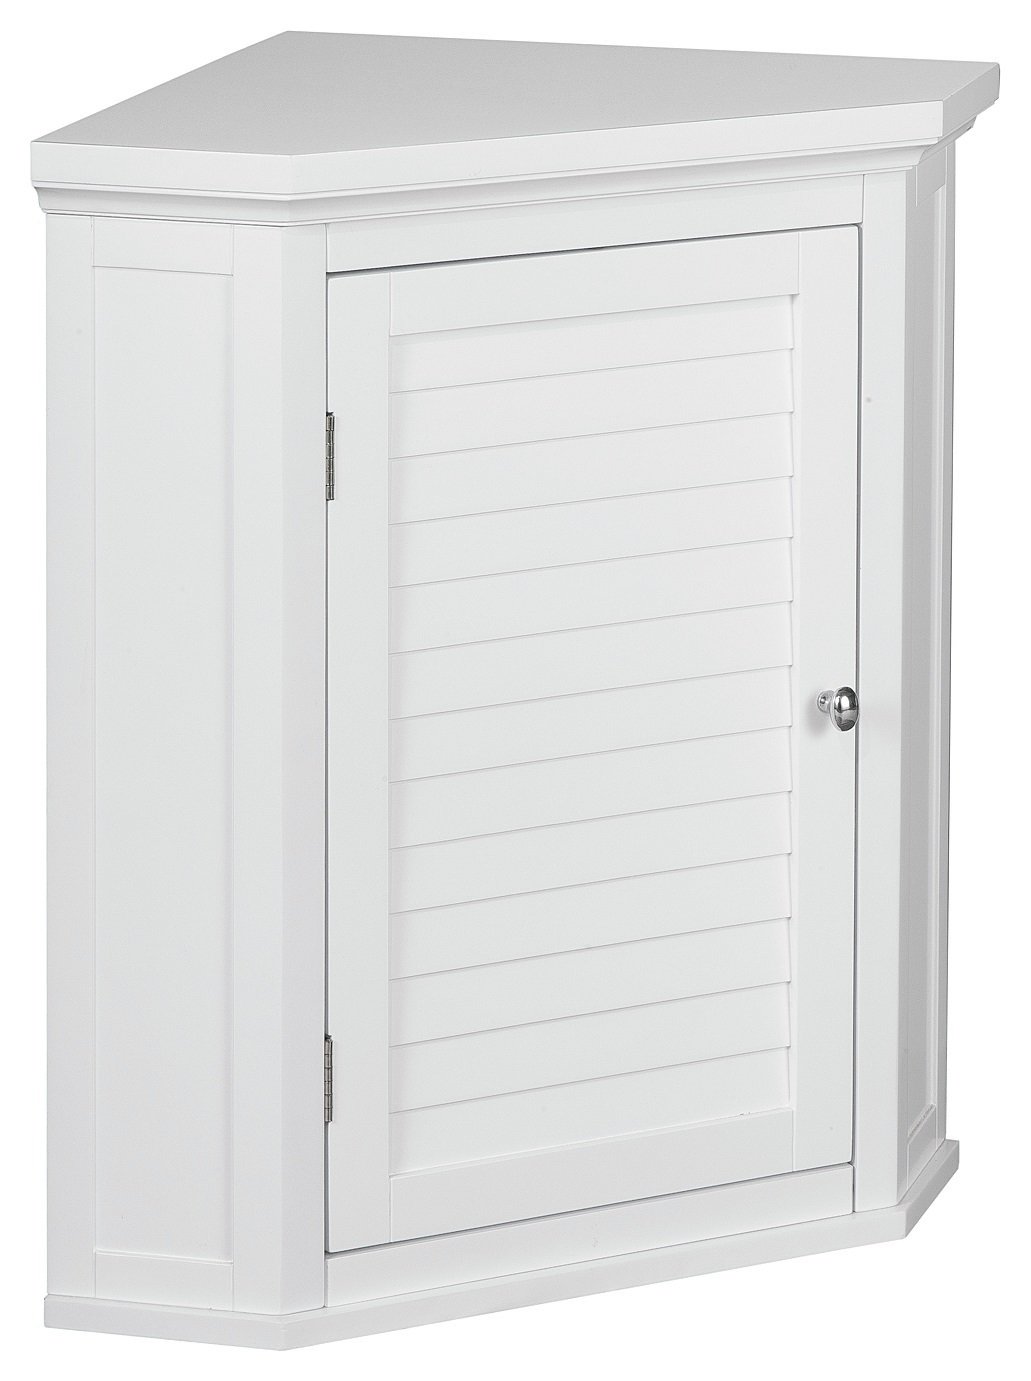 Teamson Home Glancy 1 Door Cabinet - White 